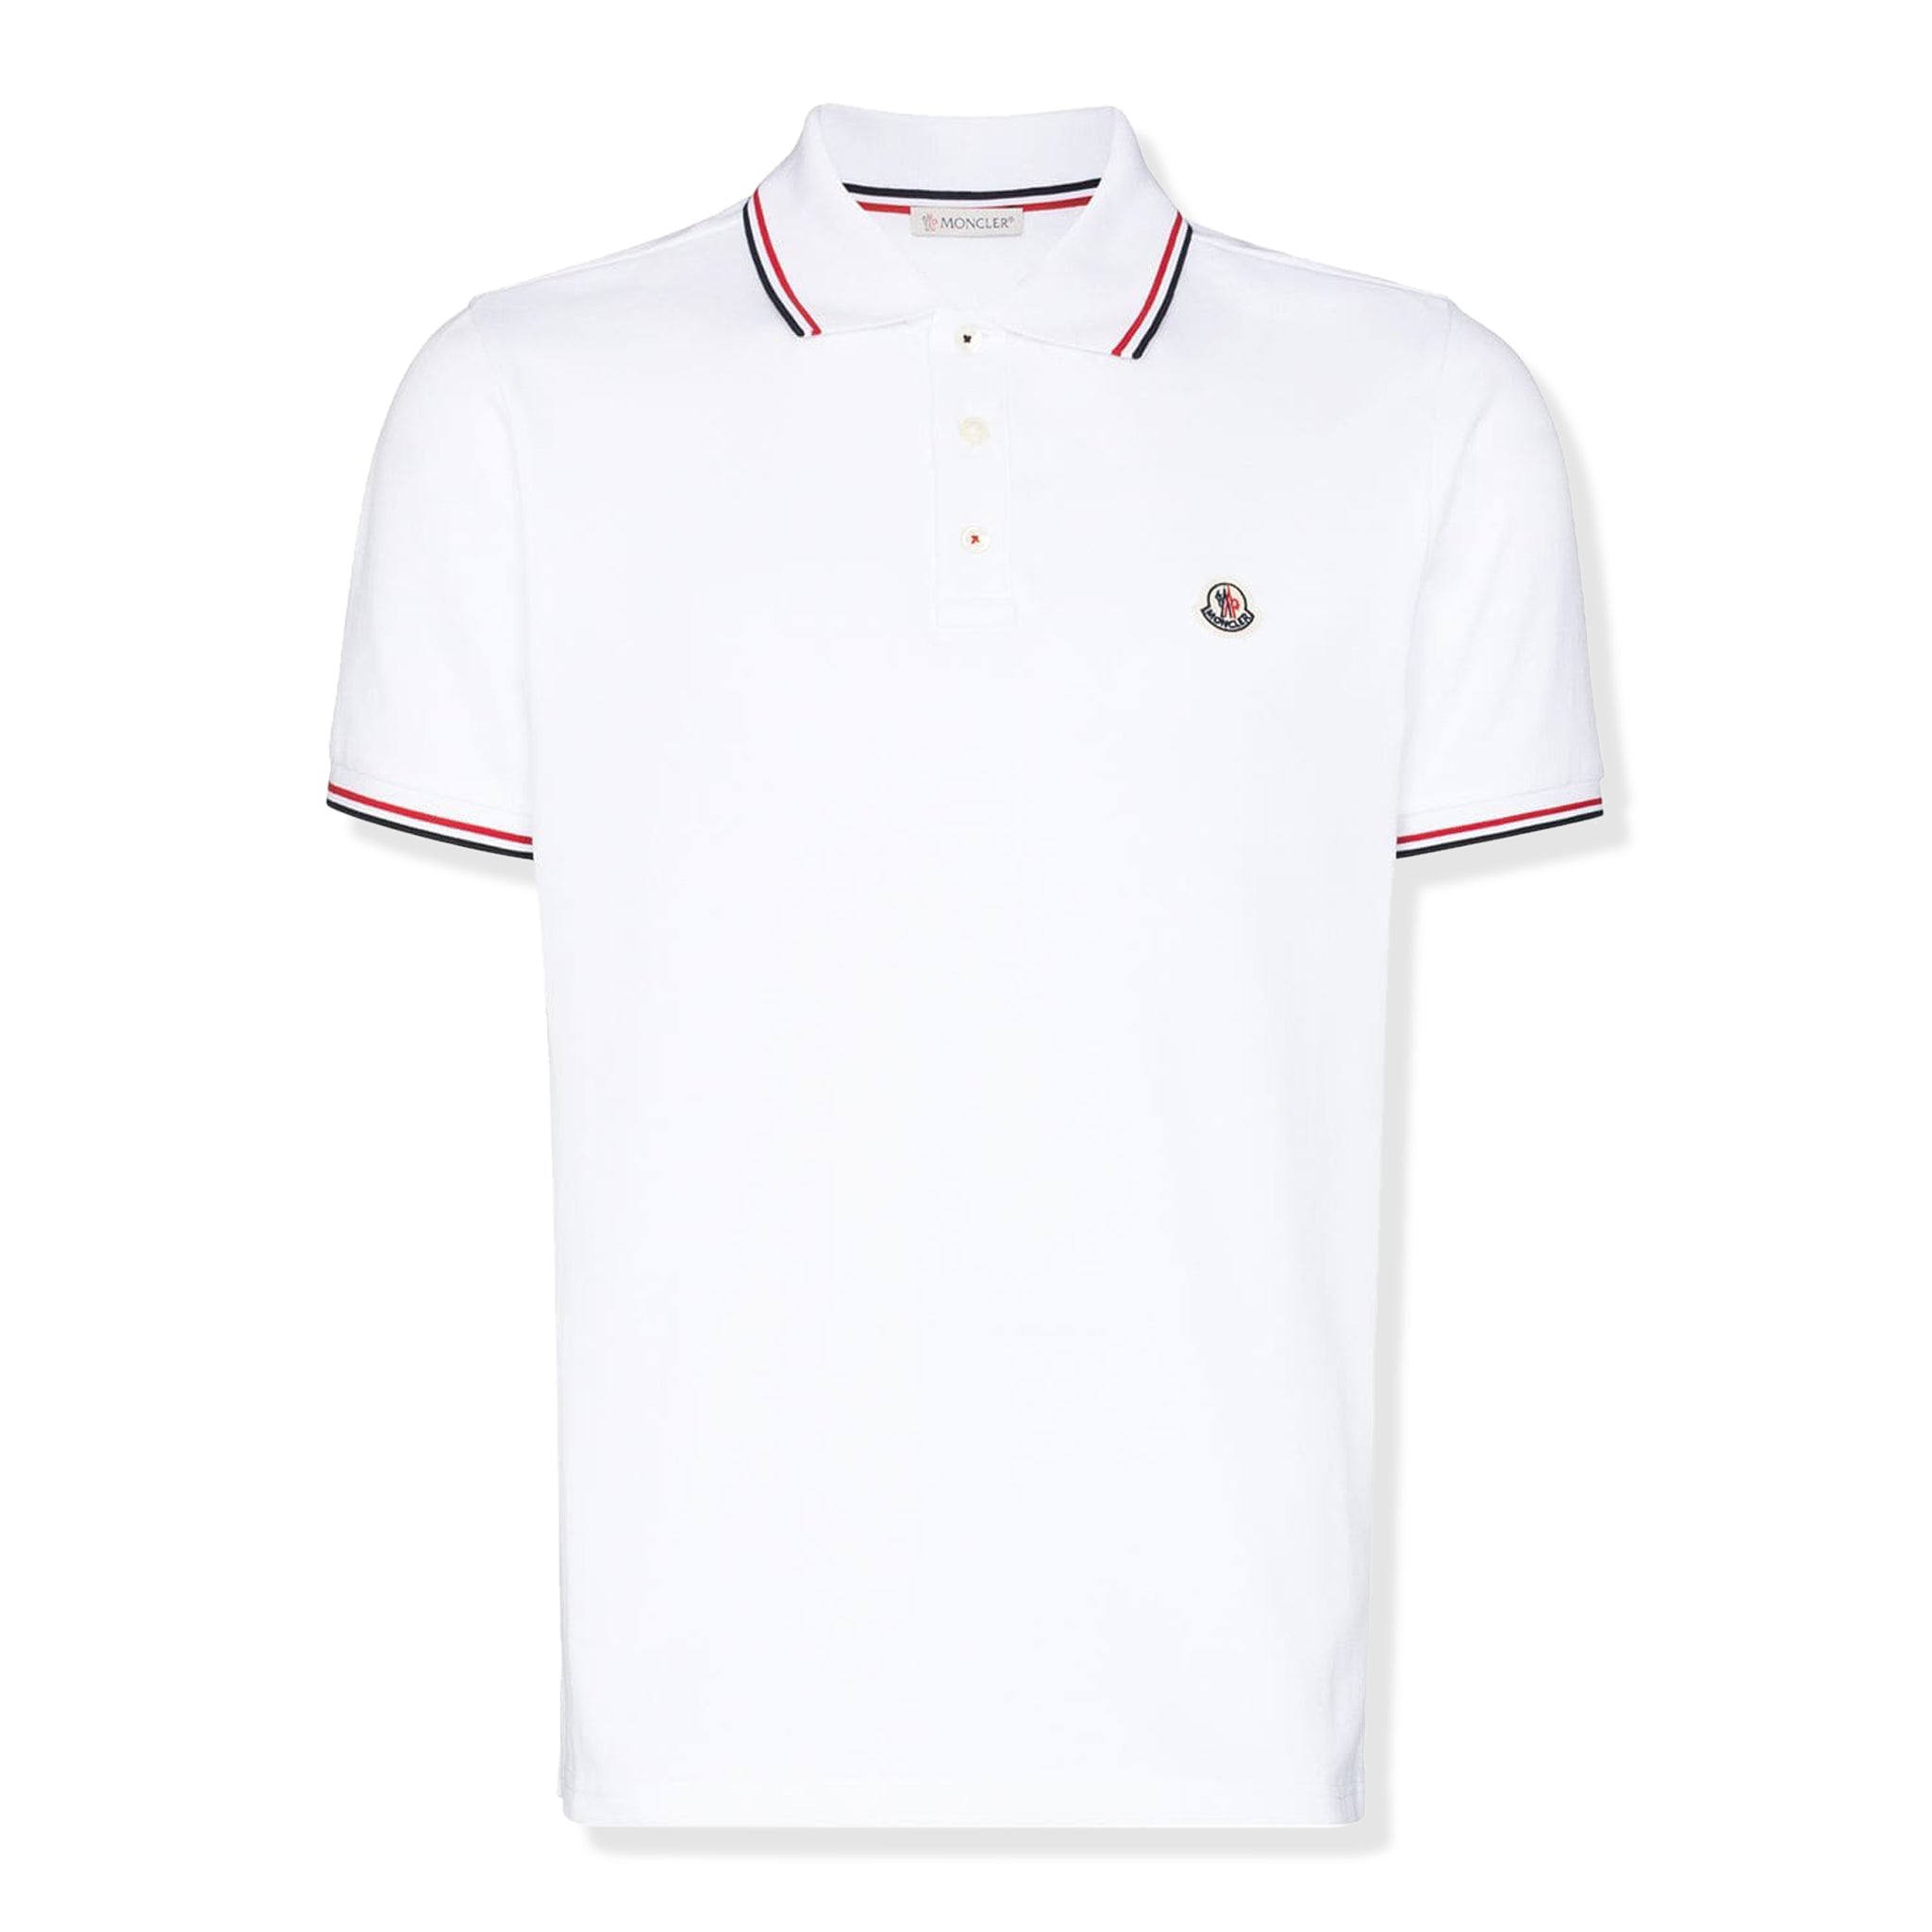 Image of Moncler Logo Patch White Polo Shirt